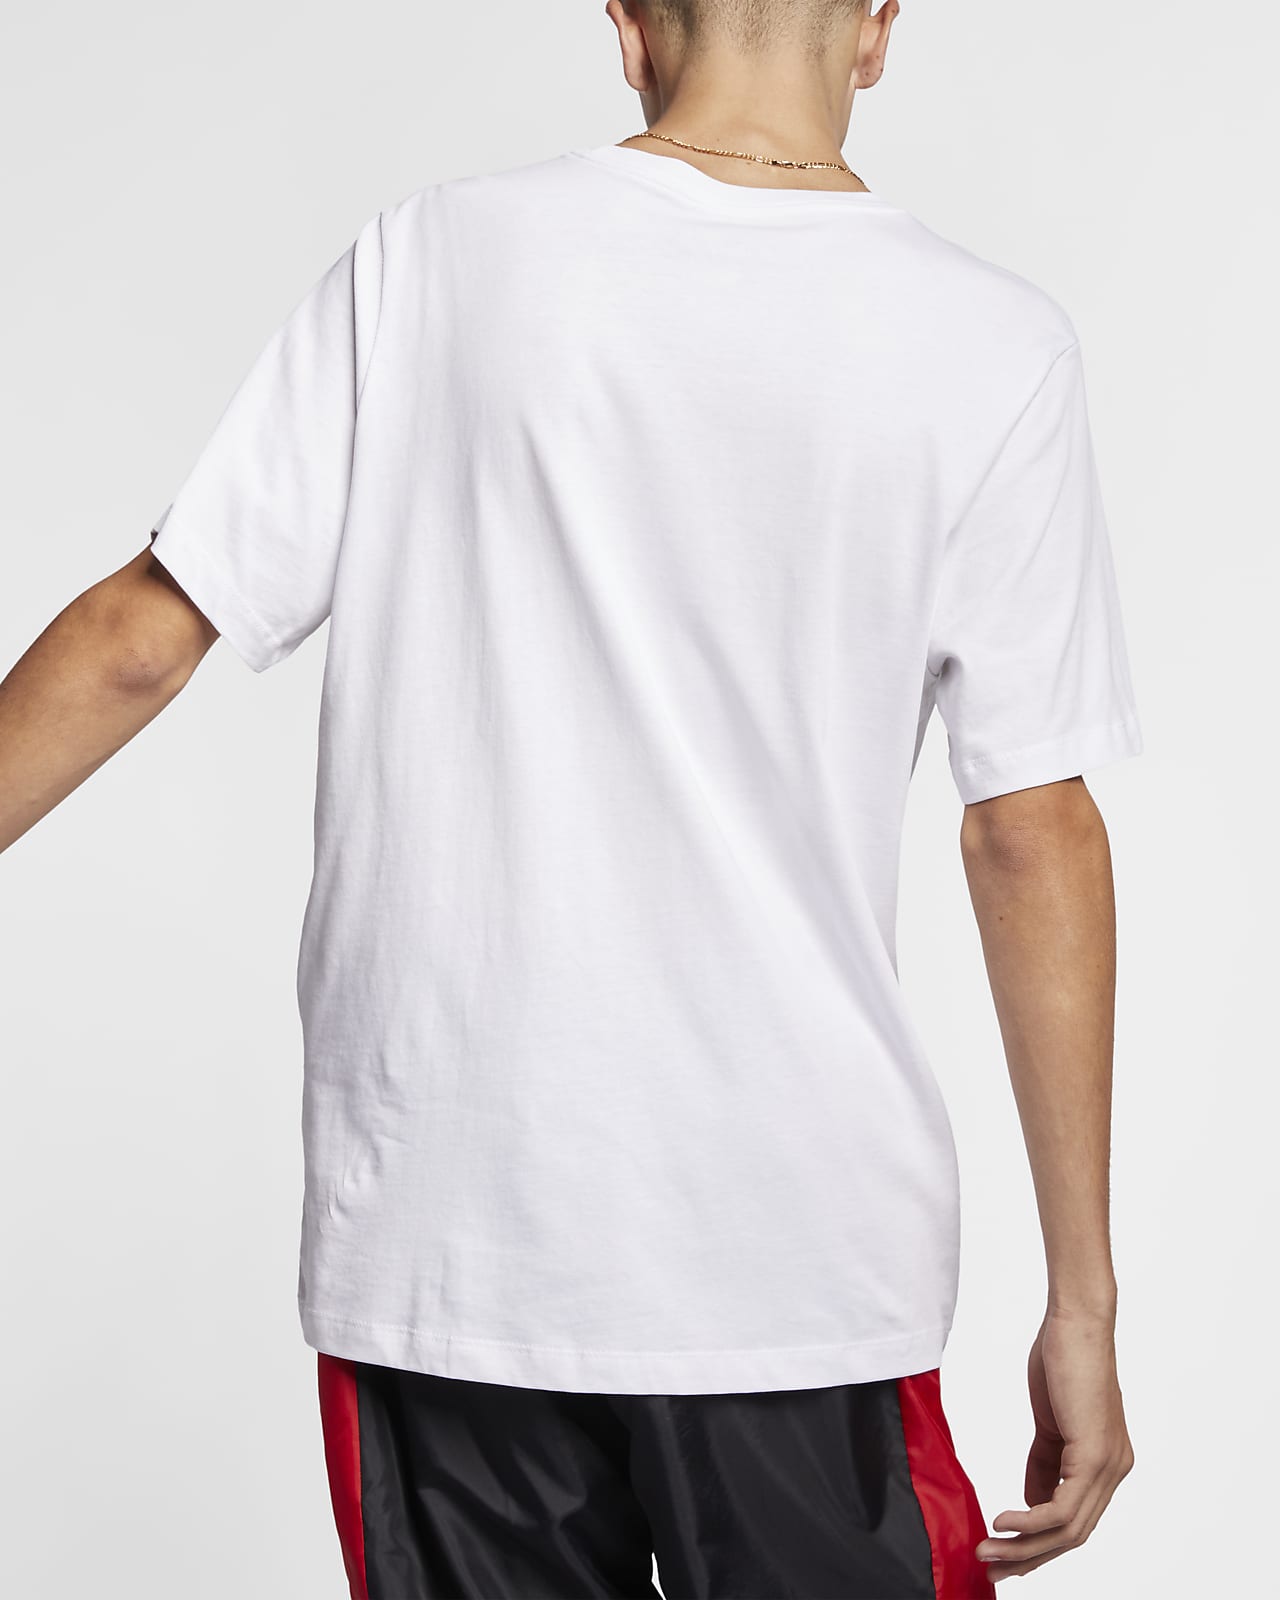 T-Shirt Nike Sportswear 100% Coton pour Homme - AR5004-887 - Orange